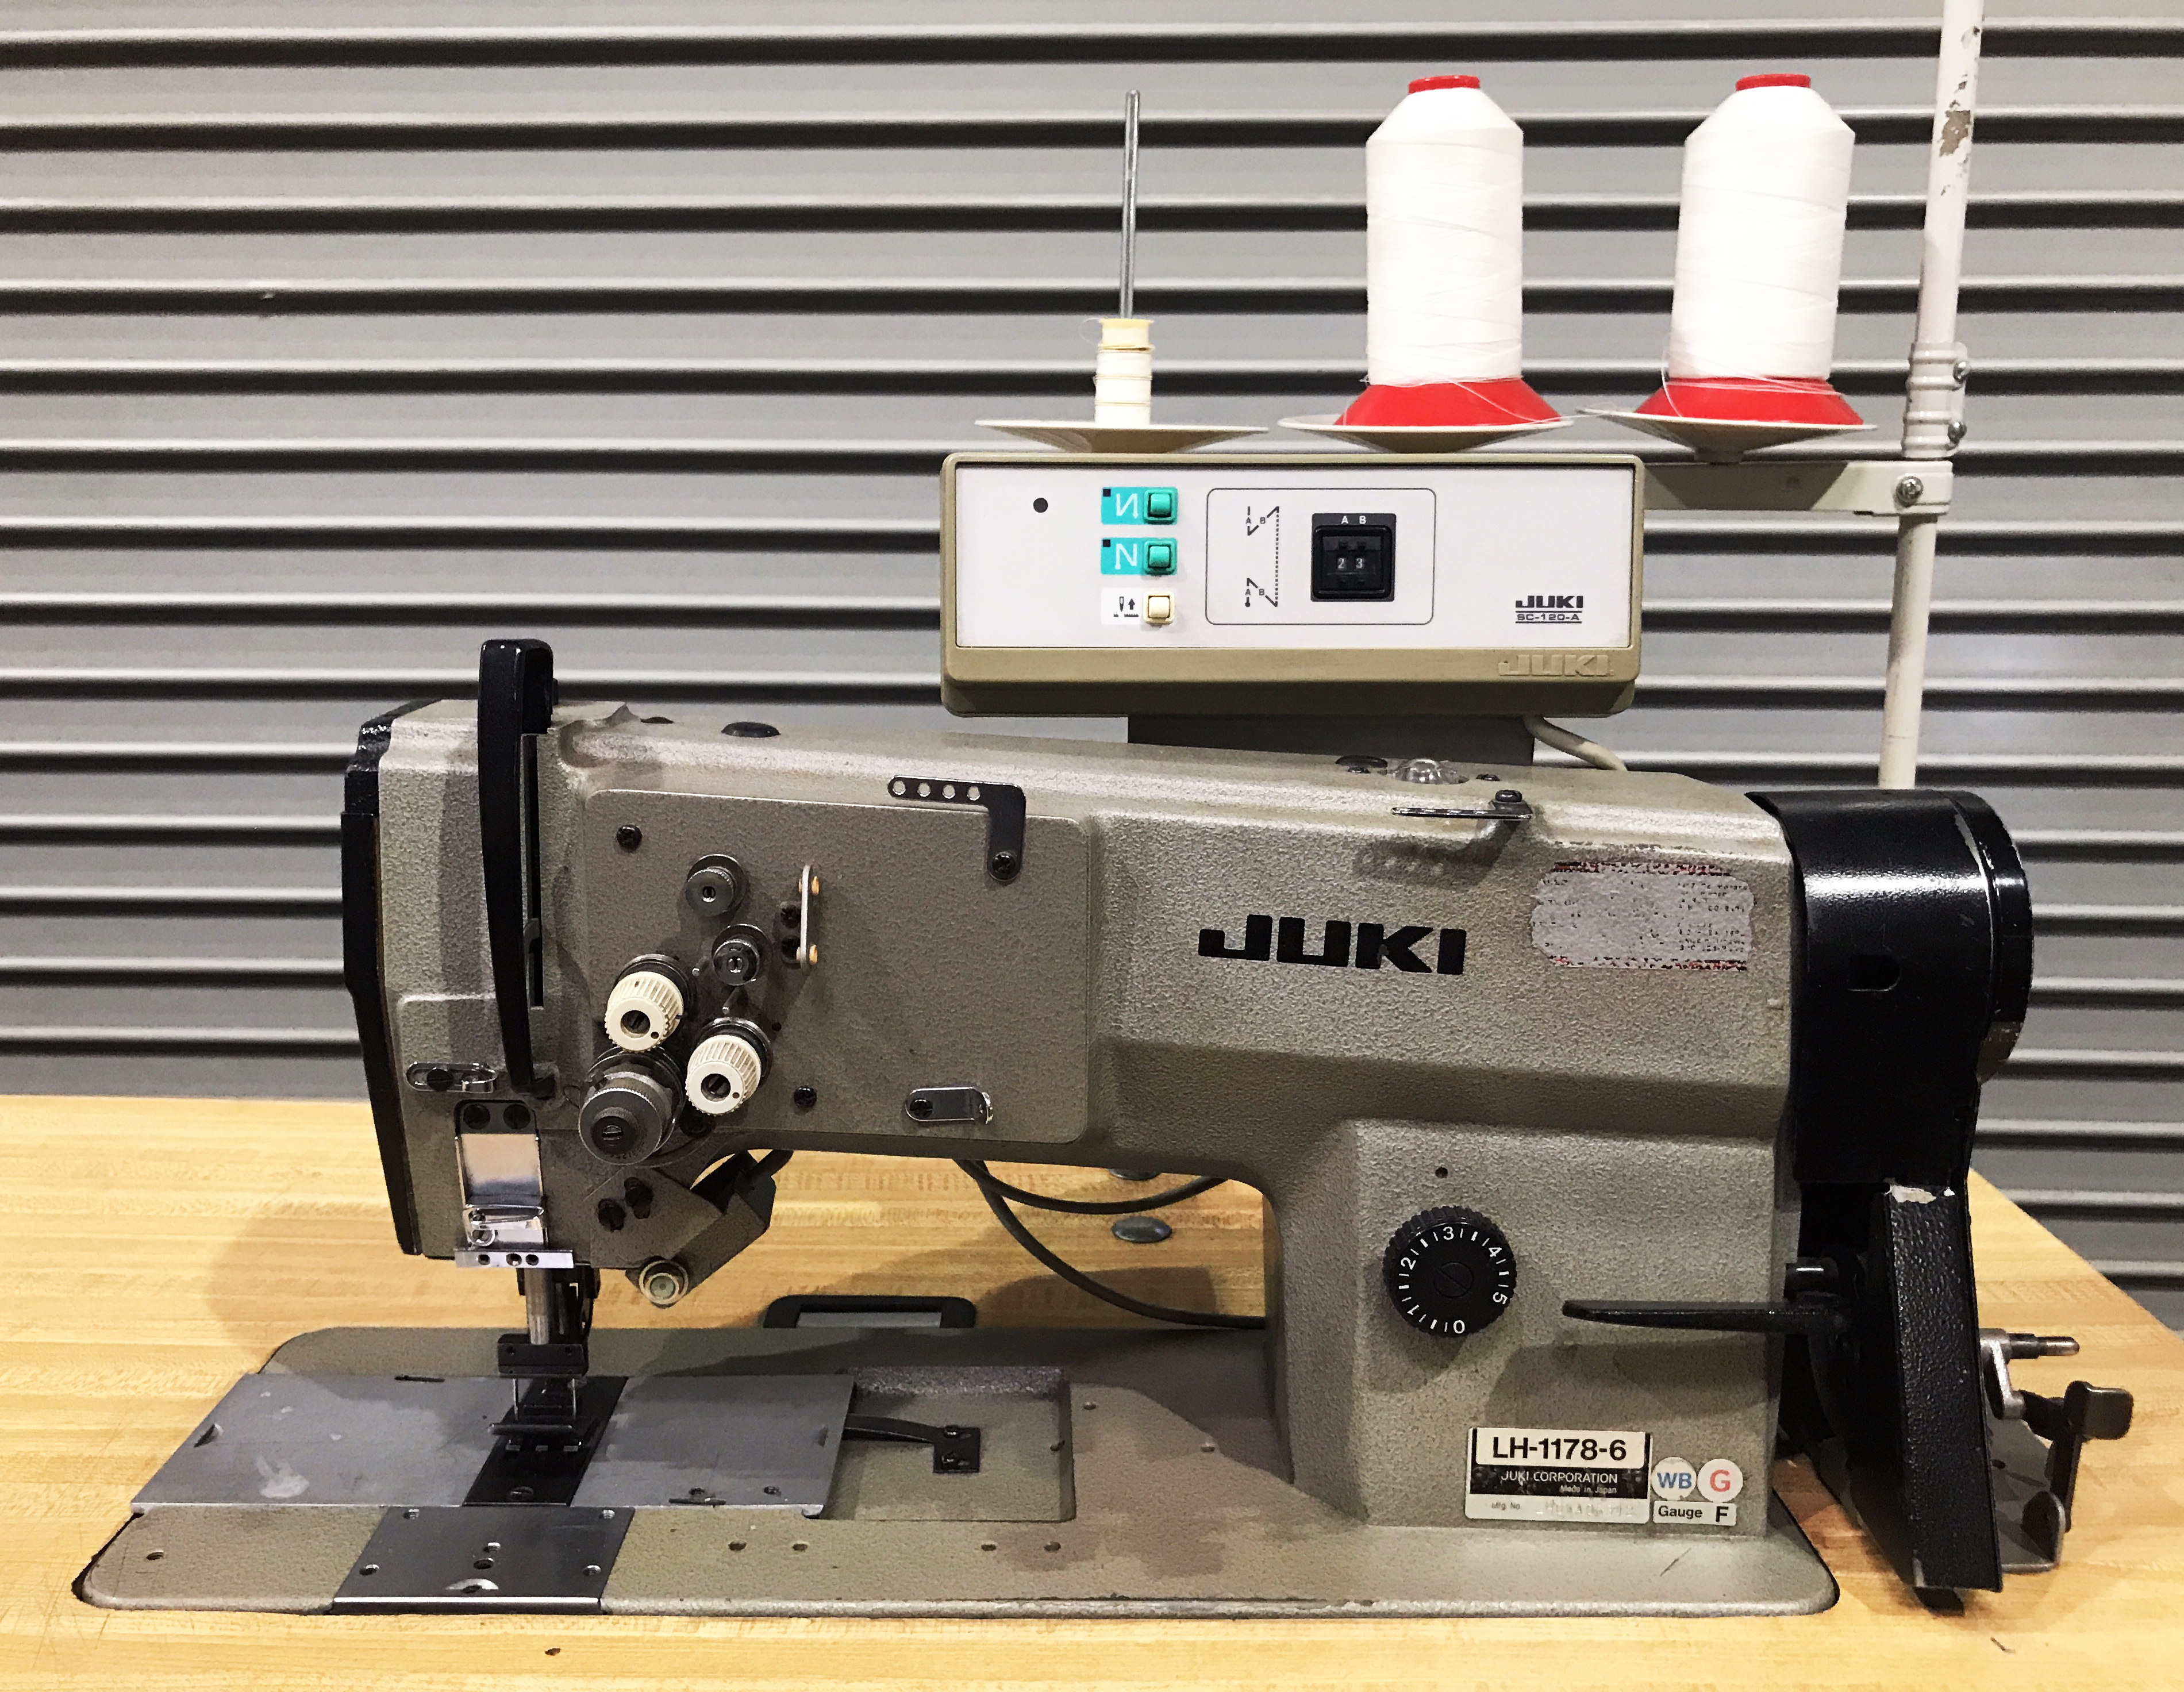 JUKI 2 Needle Industrial Sewing Machine(LH1178-6)